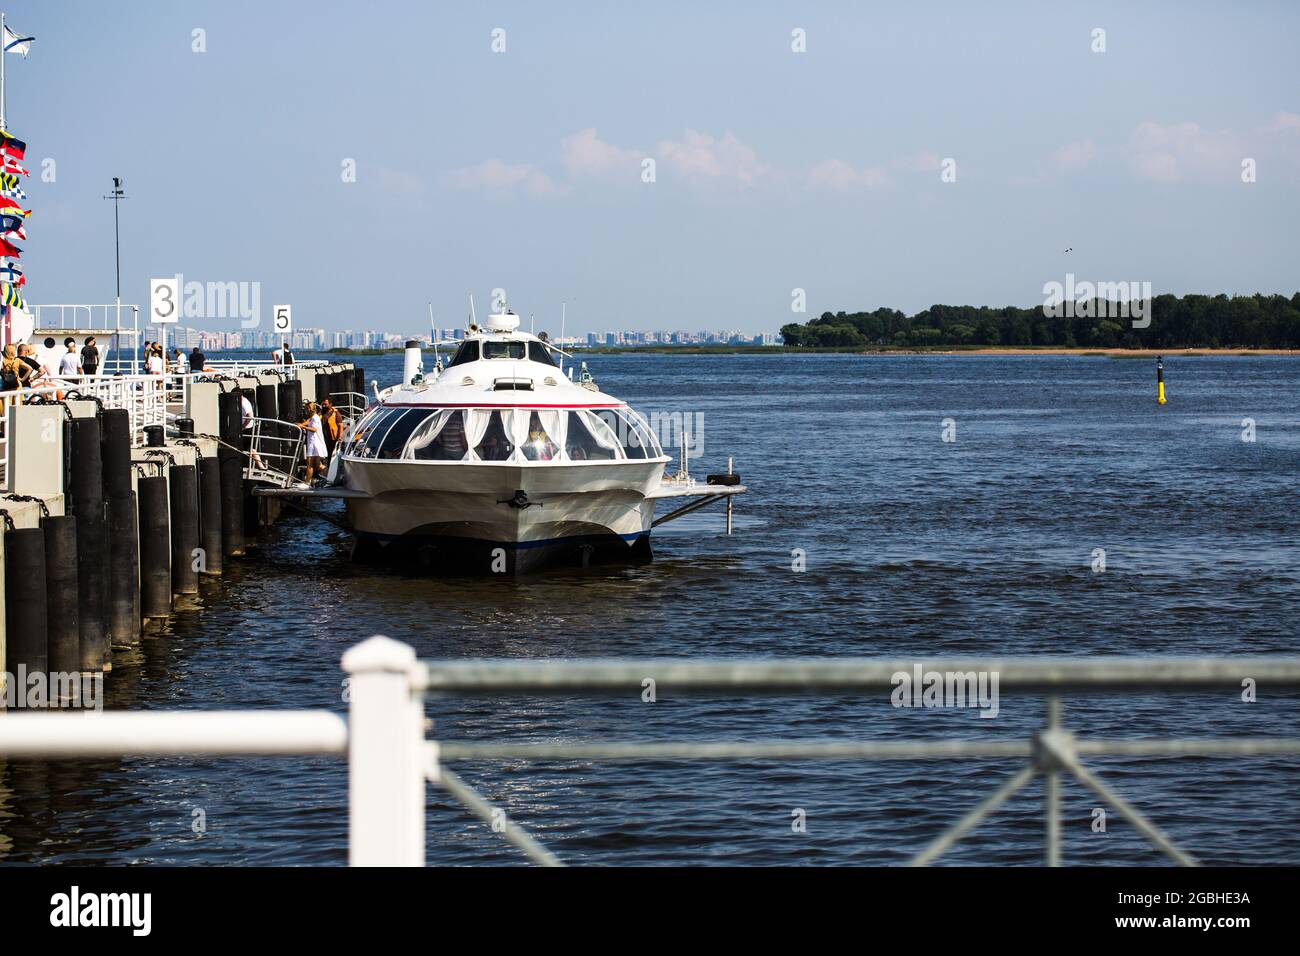 Saint-Petersburg, Petergof, Russia - July 09 2021: Meteor, hydrofoil boat near the Peterhof pier. Stock Photo